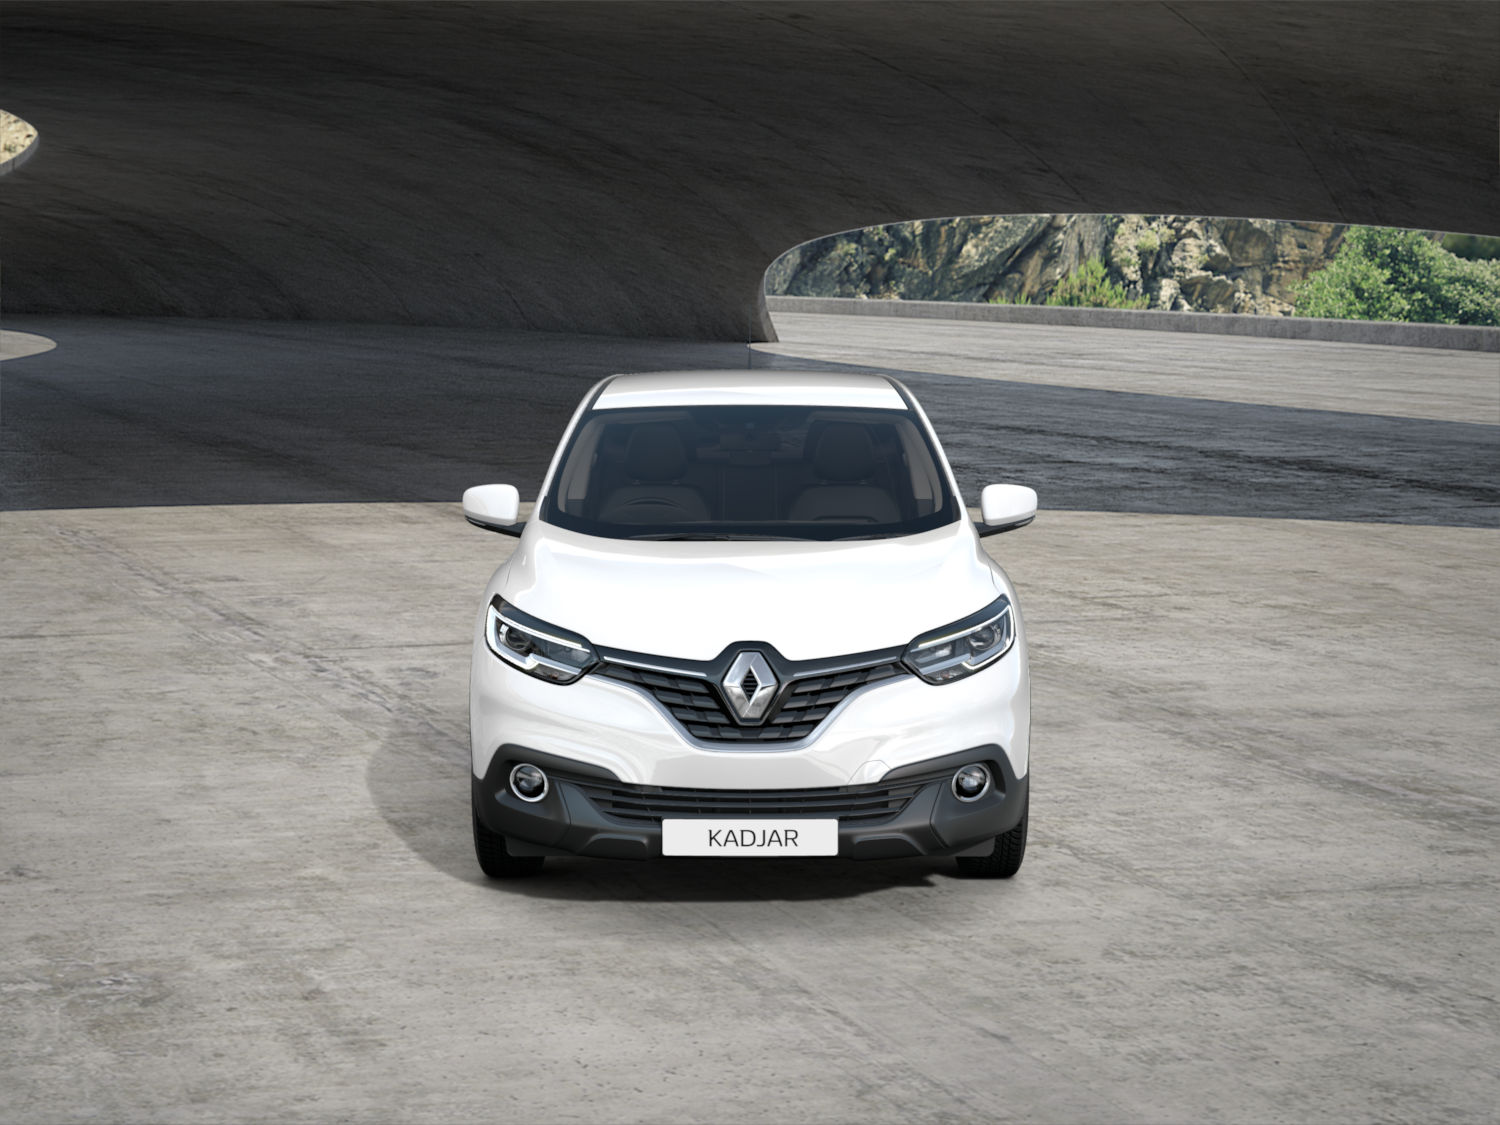 Renault Madjar Expression + front view